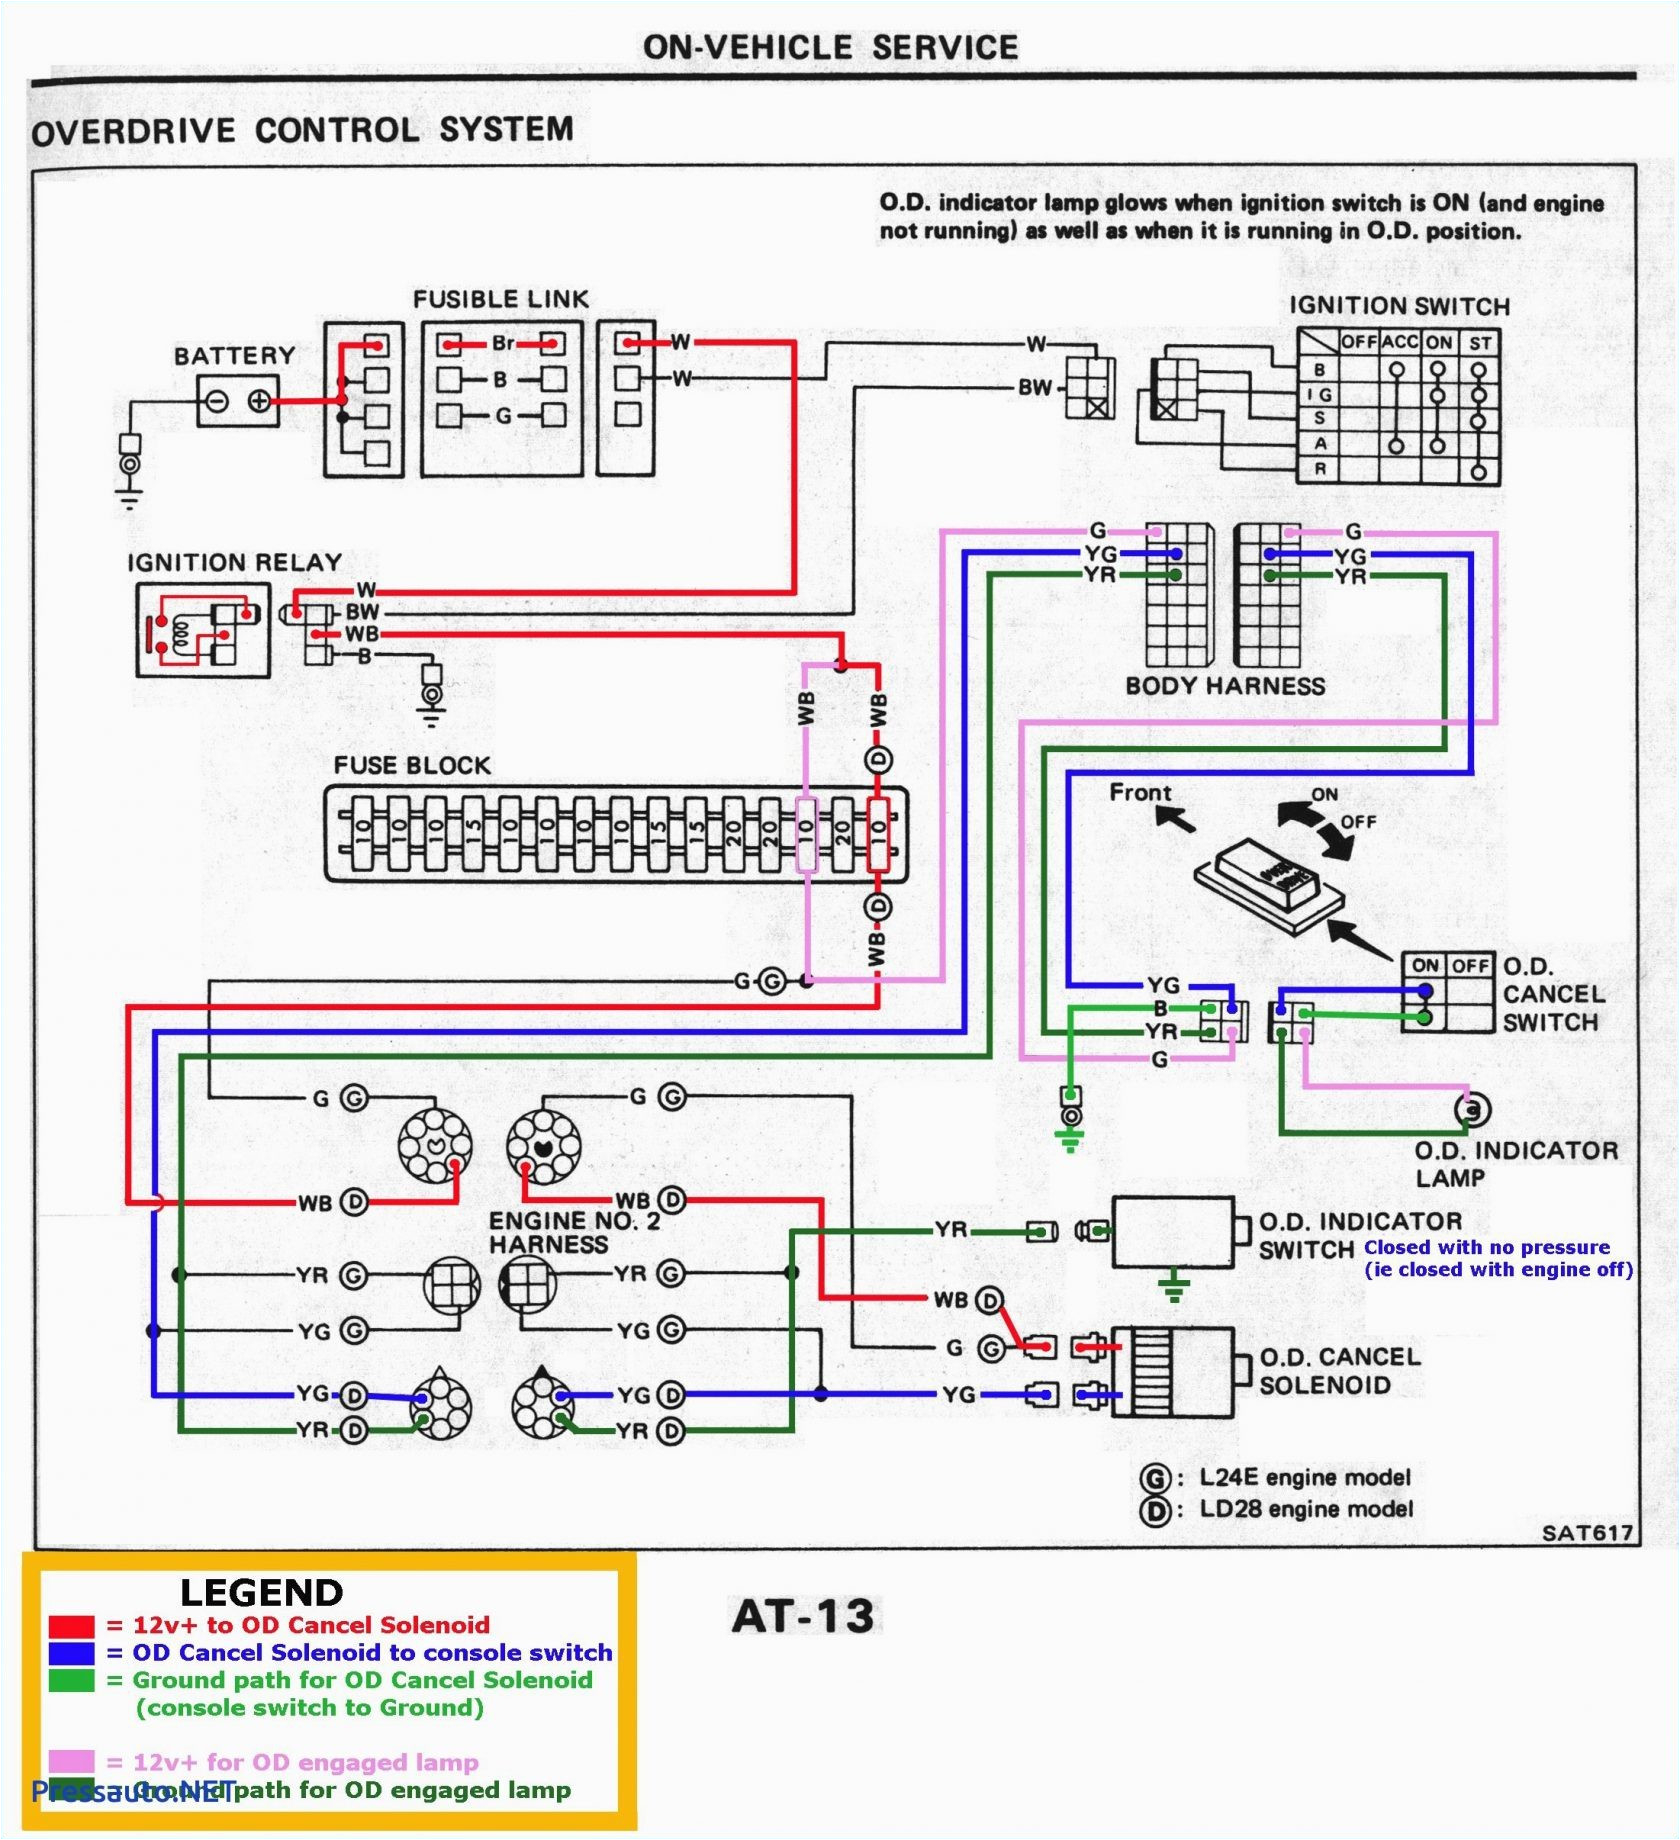 ilec rj31x wiring diagram wiring diagram ilec rj31x wiring diagram